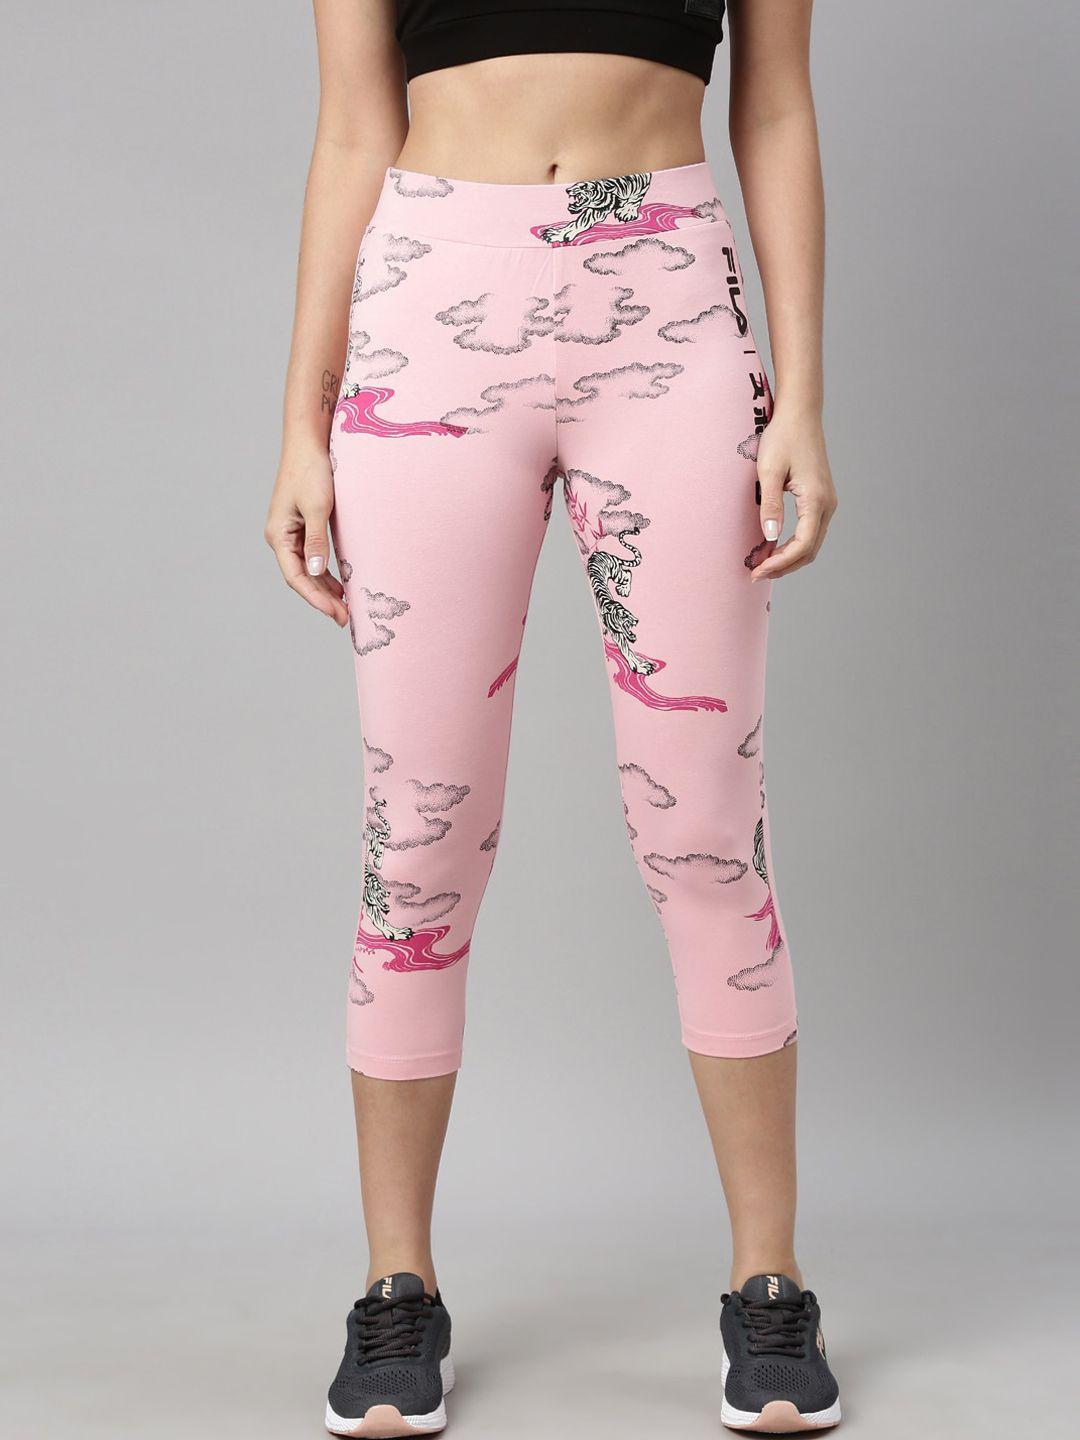 fila women pink printed tights